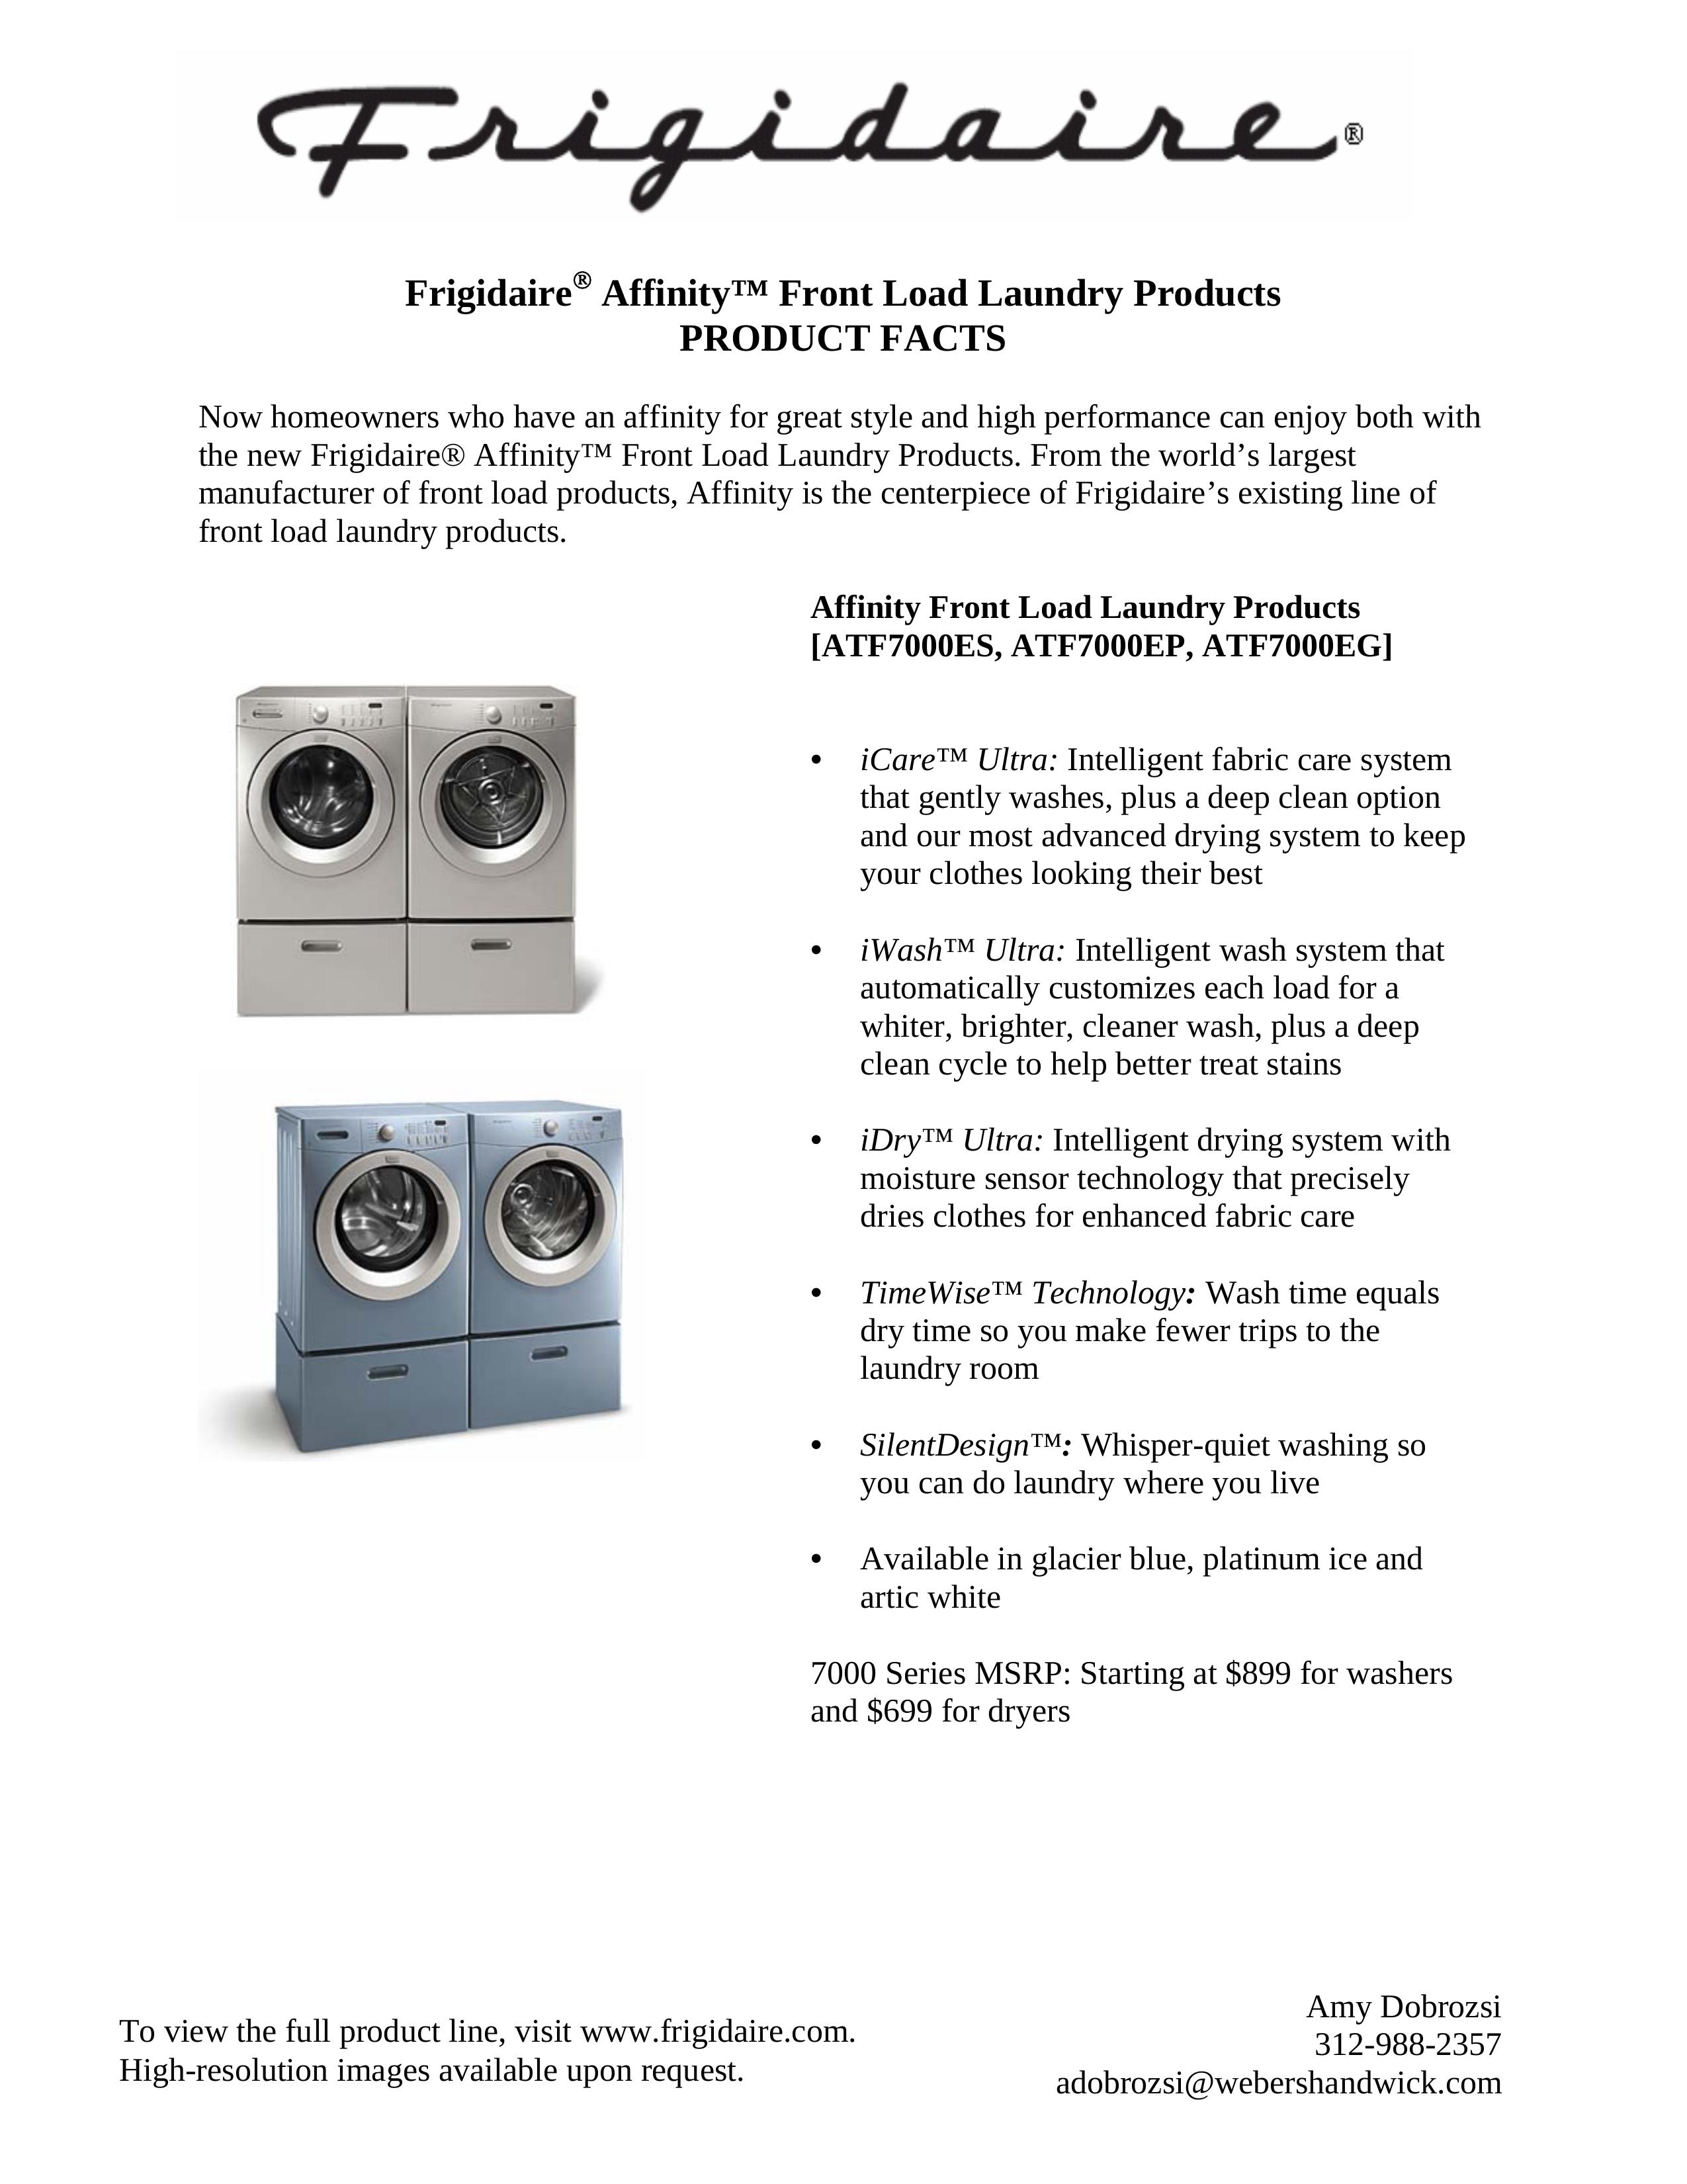 Frigidaire ATF7000EG Washer User Manual